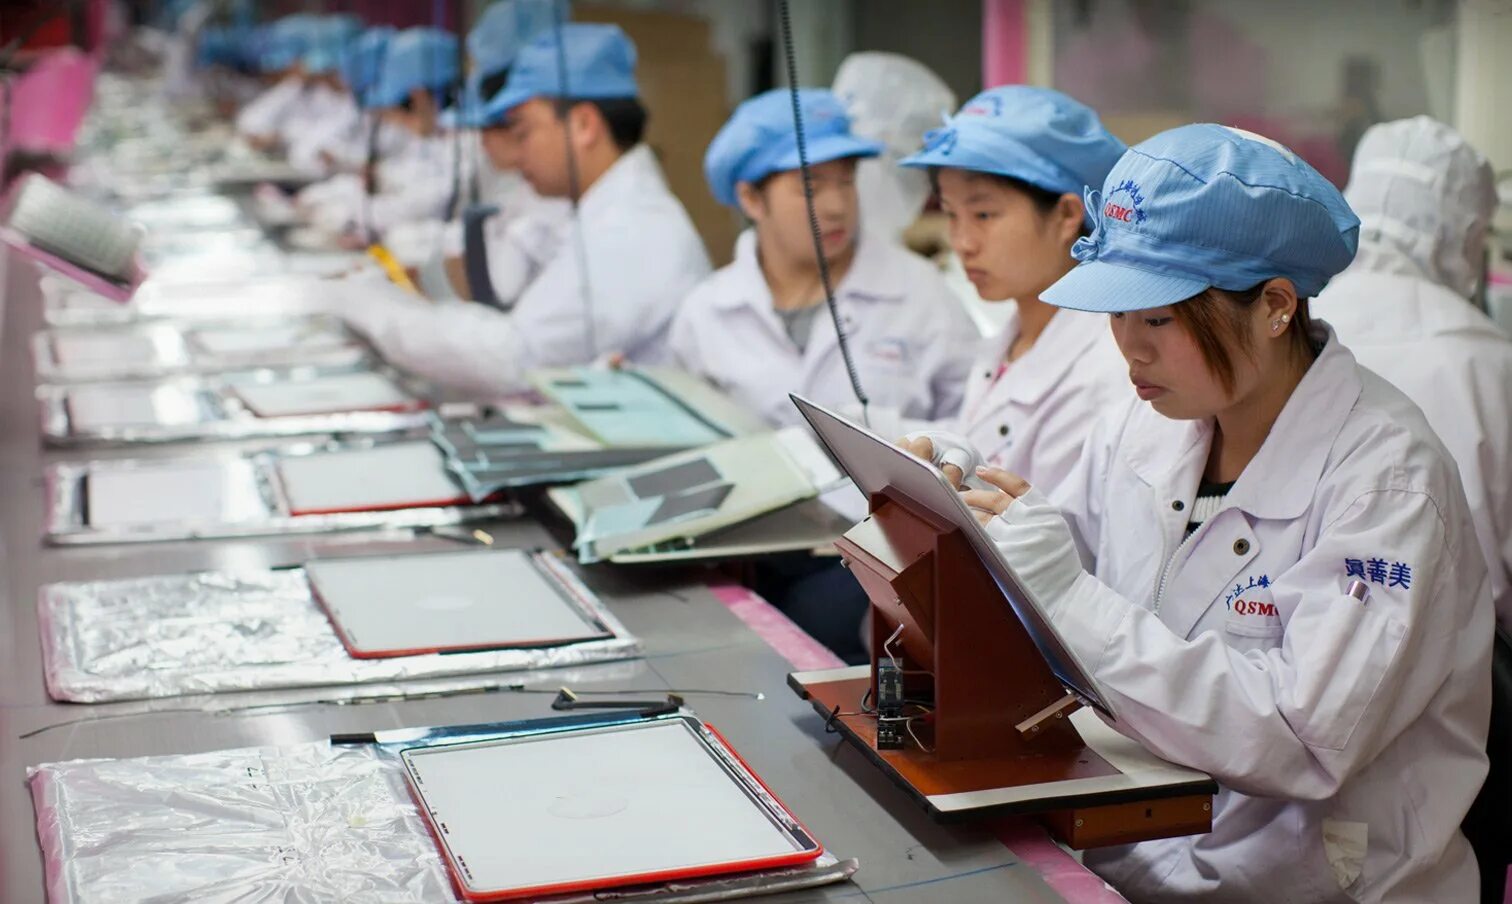 Завод Apple в Китае. Китайские предприятия. Завод Foxconn в Китае. Китайские работники. Производители электроники тайвань